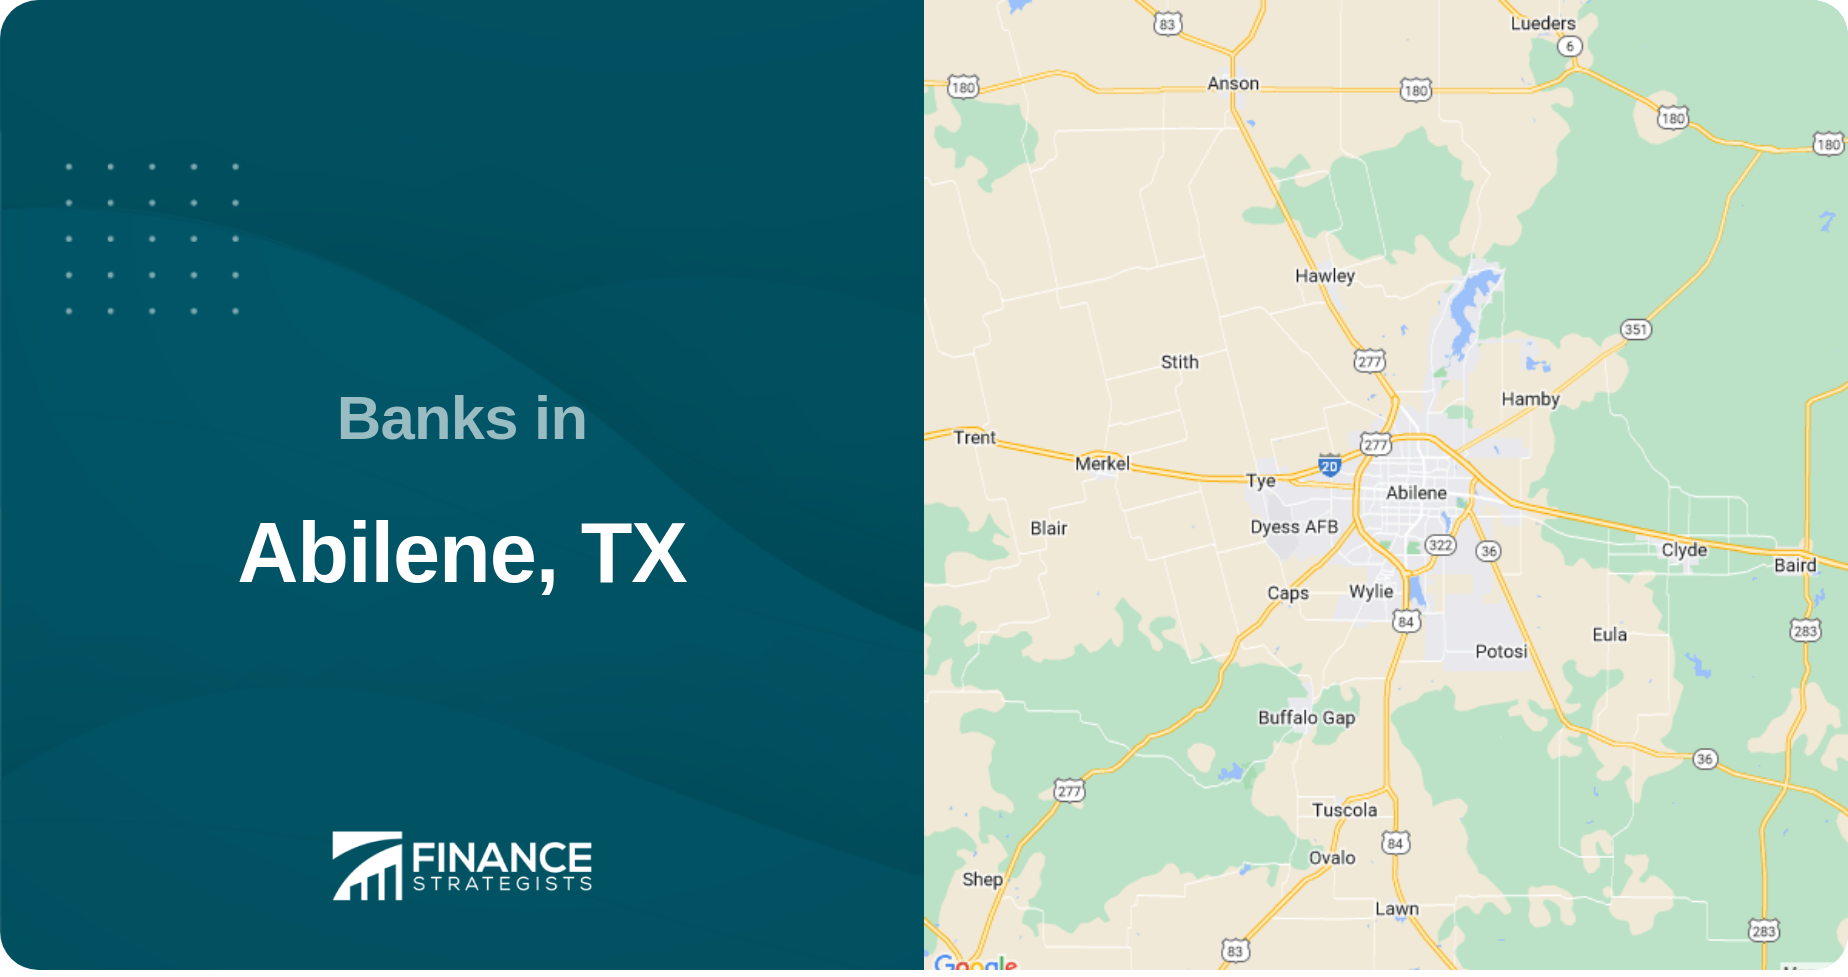 Banks in Abilene, TX